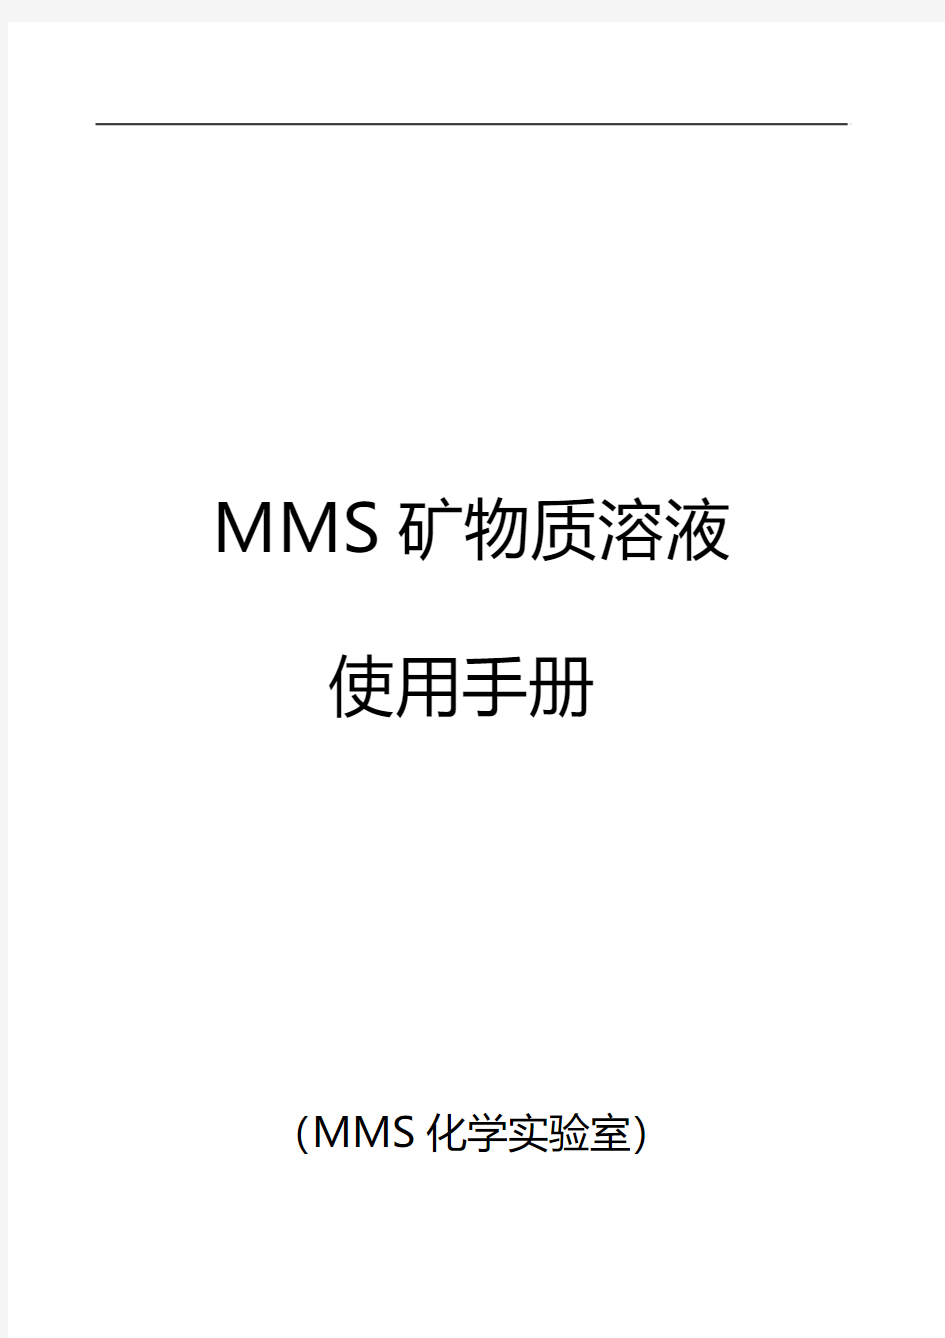 MMS溶液使用手册百度分享版